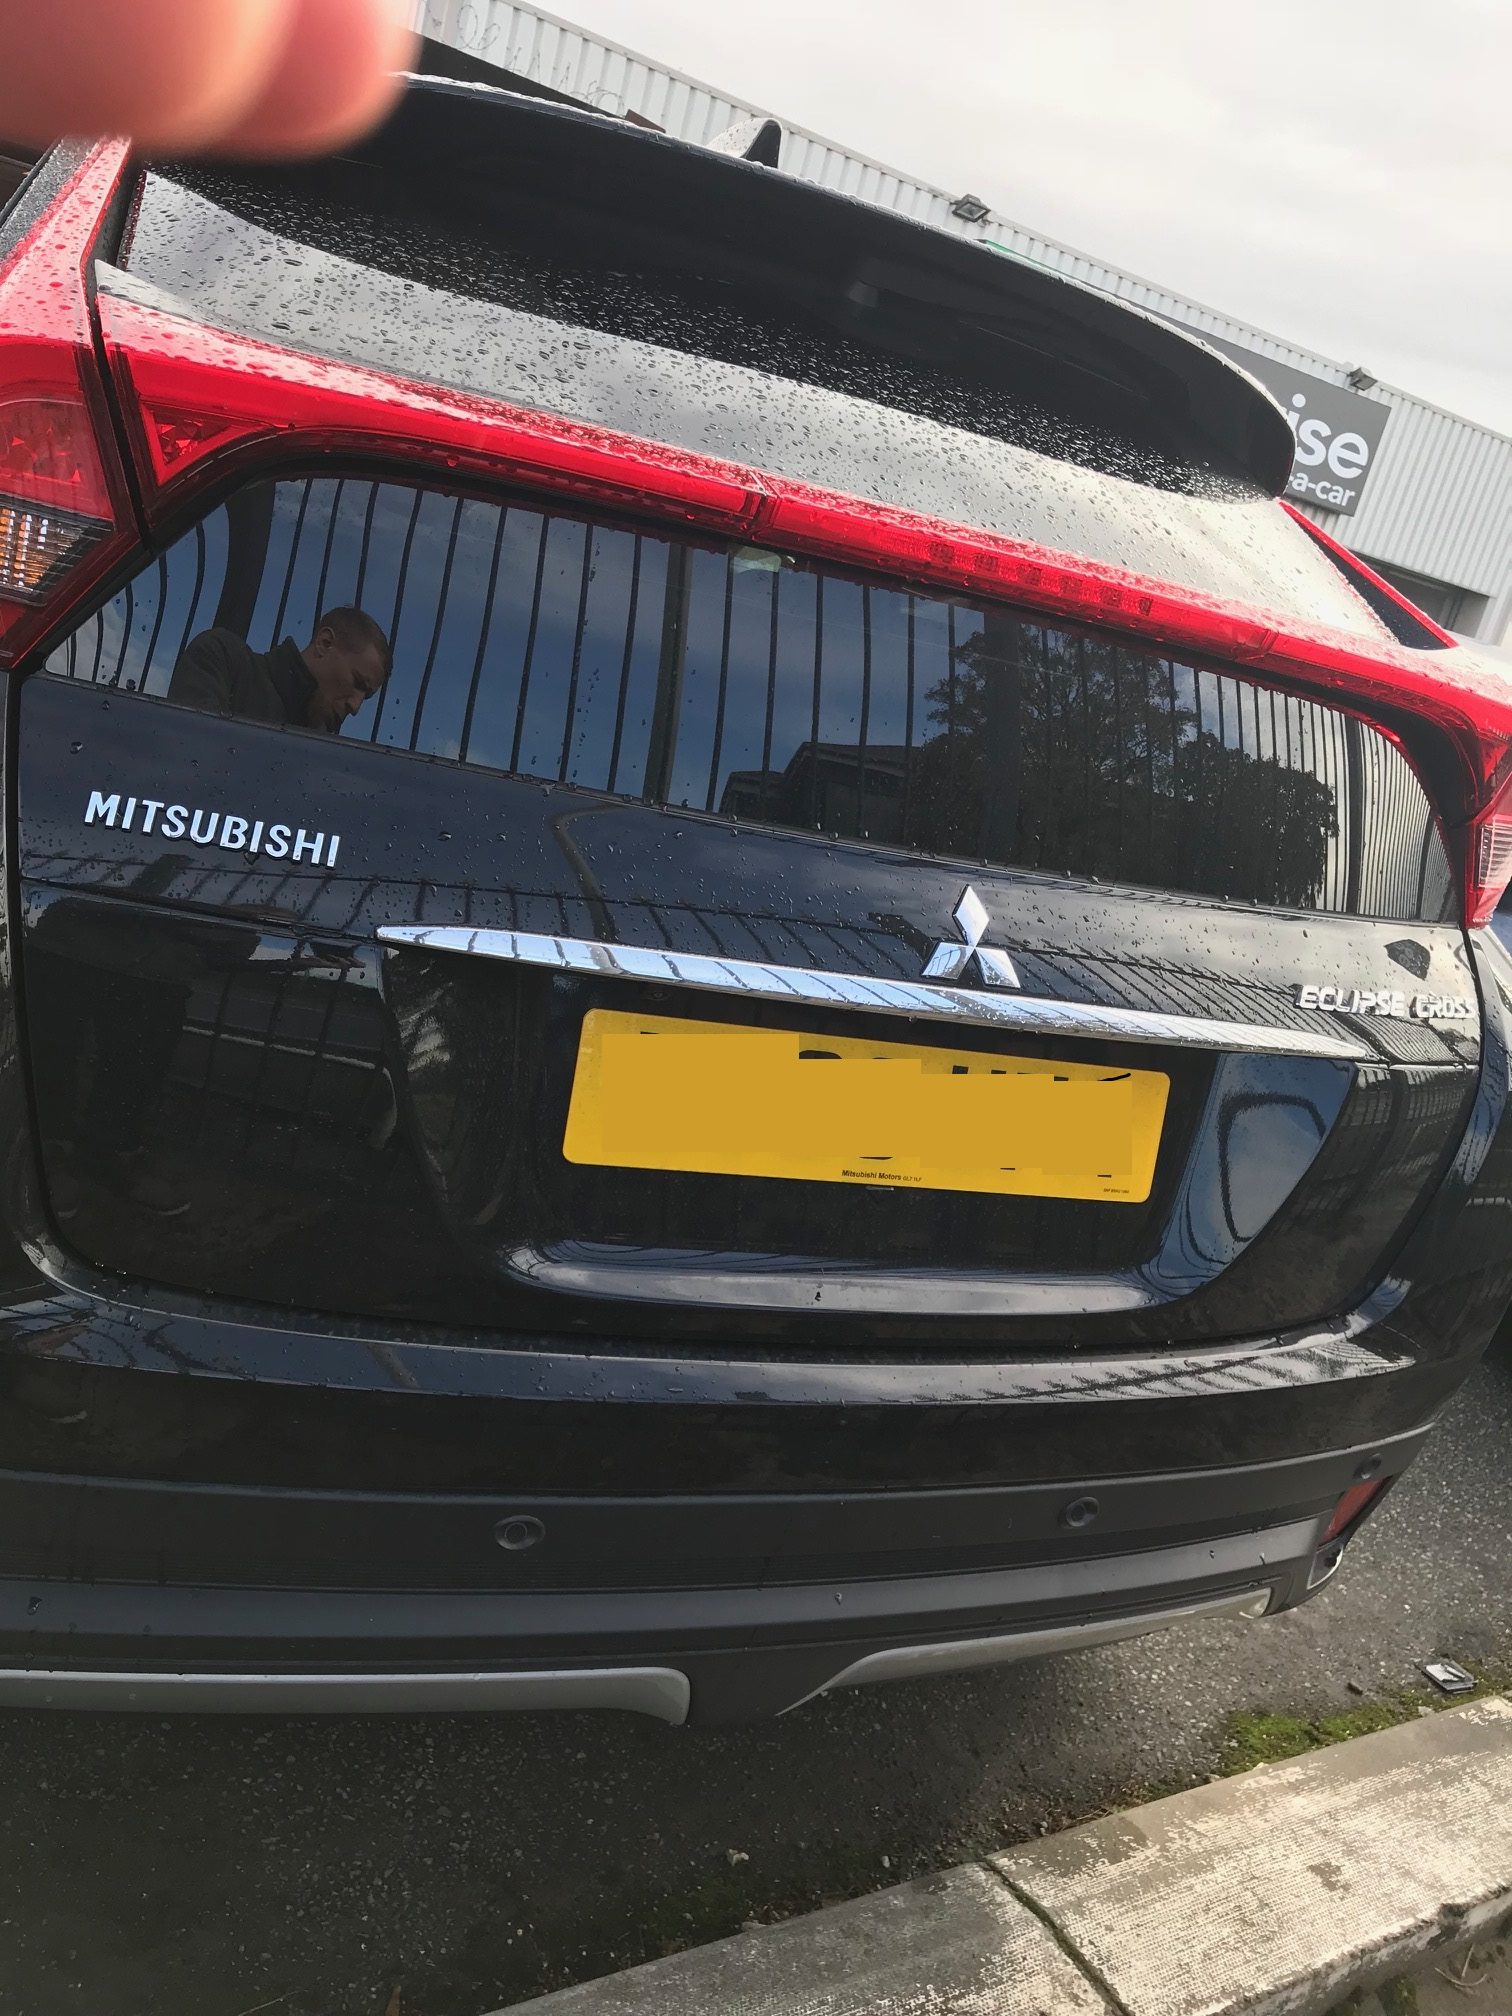 Mitsubishi ECLIPSE CROSS HATCHBACK 1.5 3 5dr (Manual Petrol) Car Leasing Information